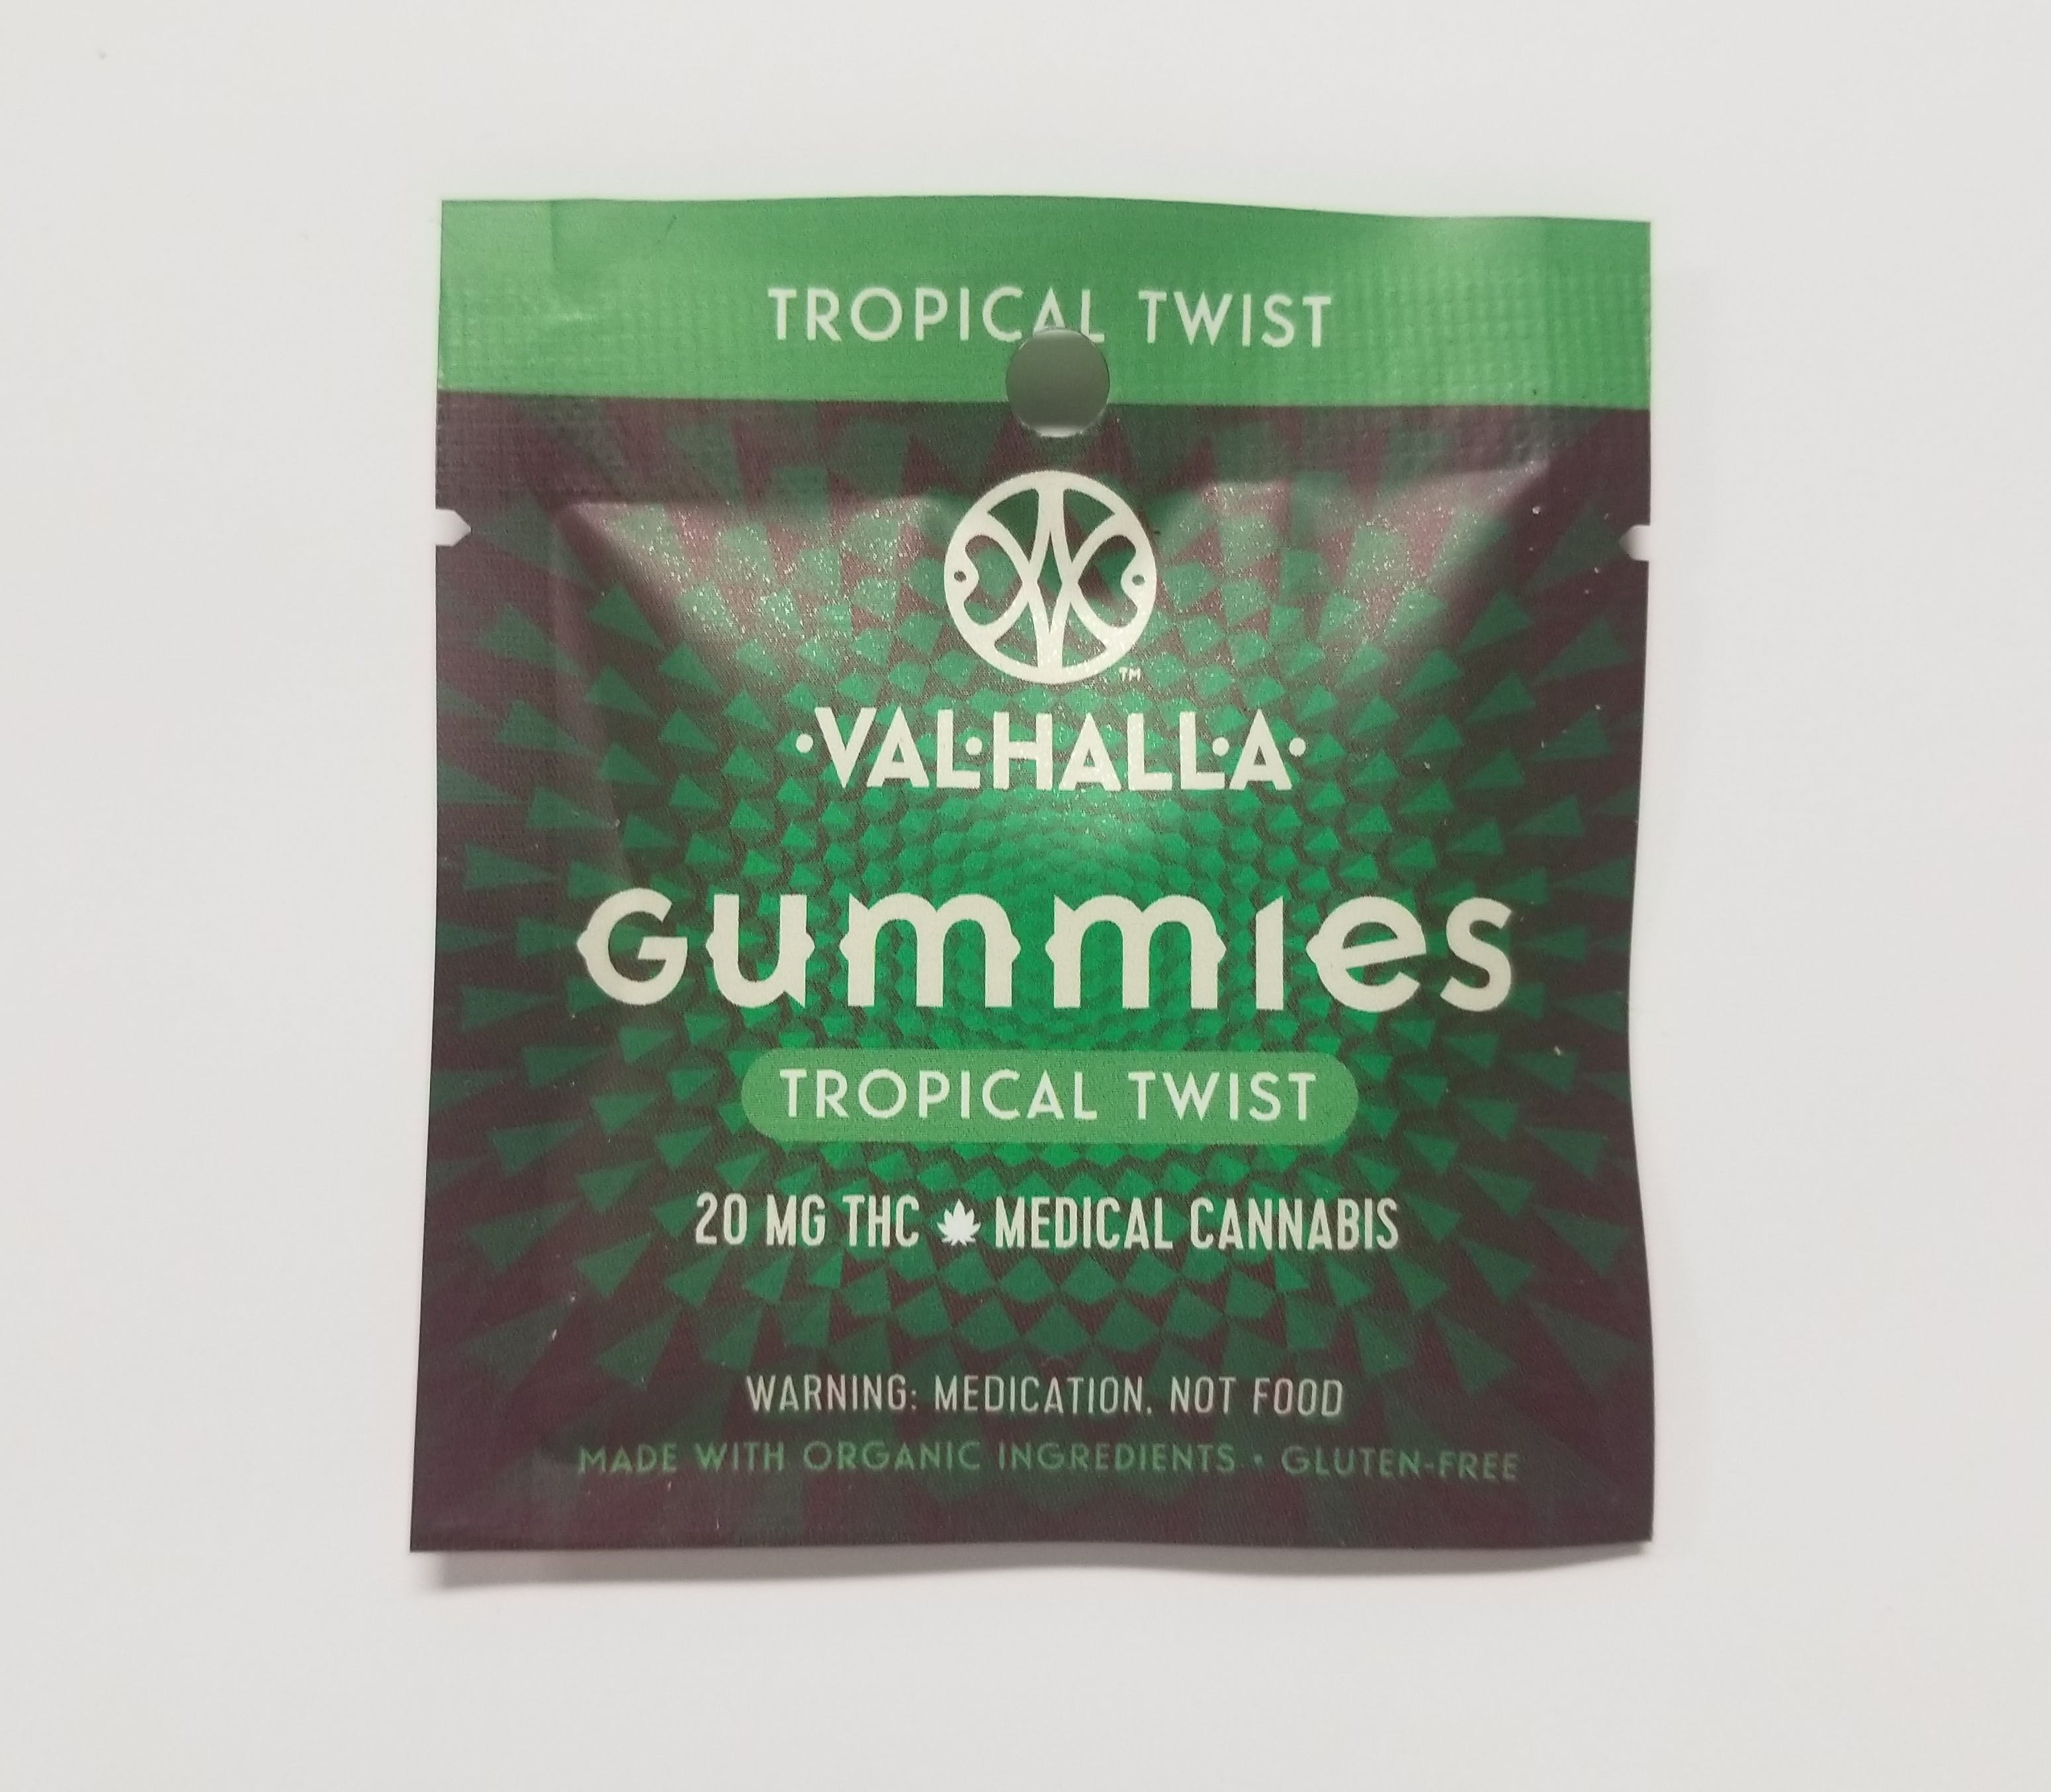 marijuana-dispensaries-mj-express-o-abq-in-albuquerque-valhalla-tropical-twist-gummies-20mg-thc